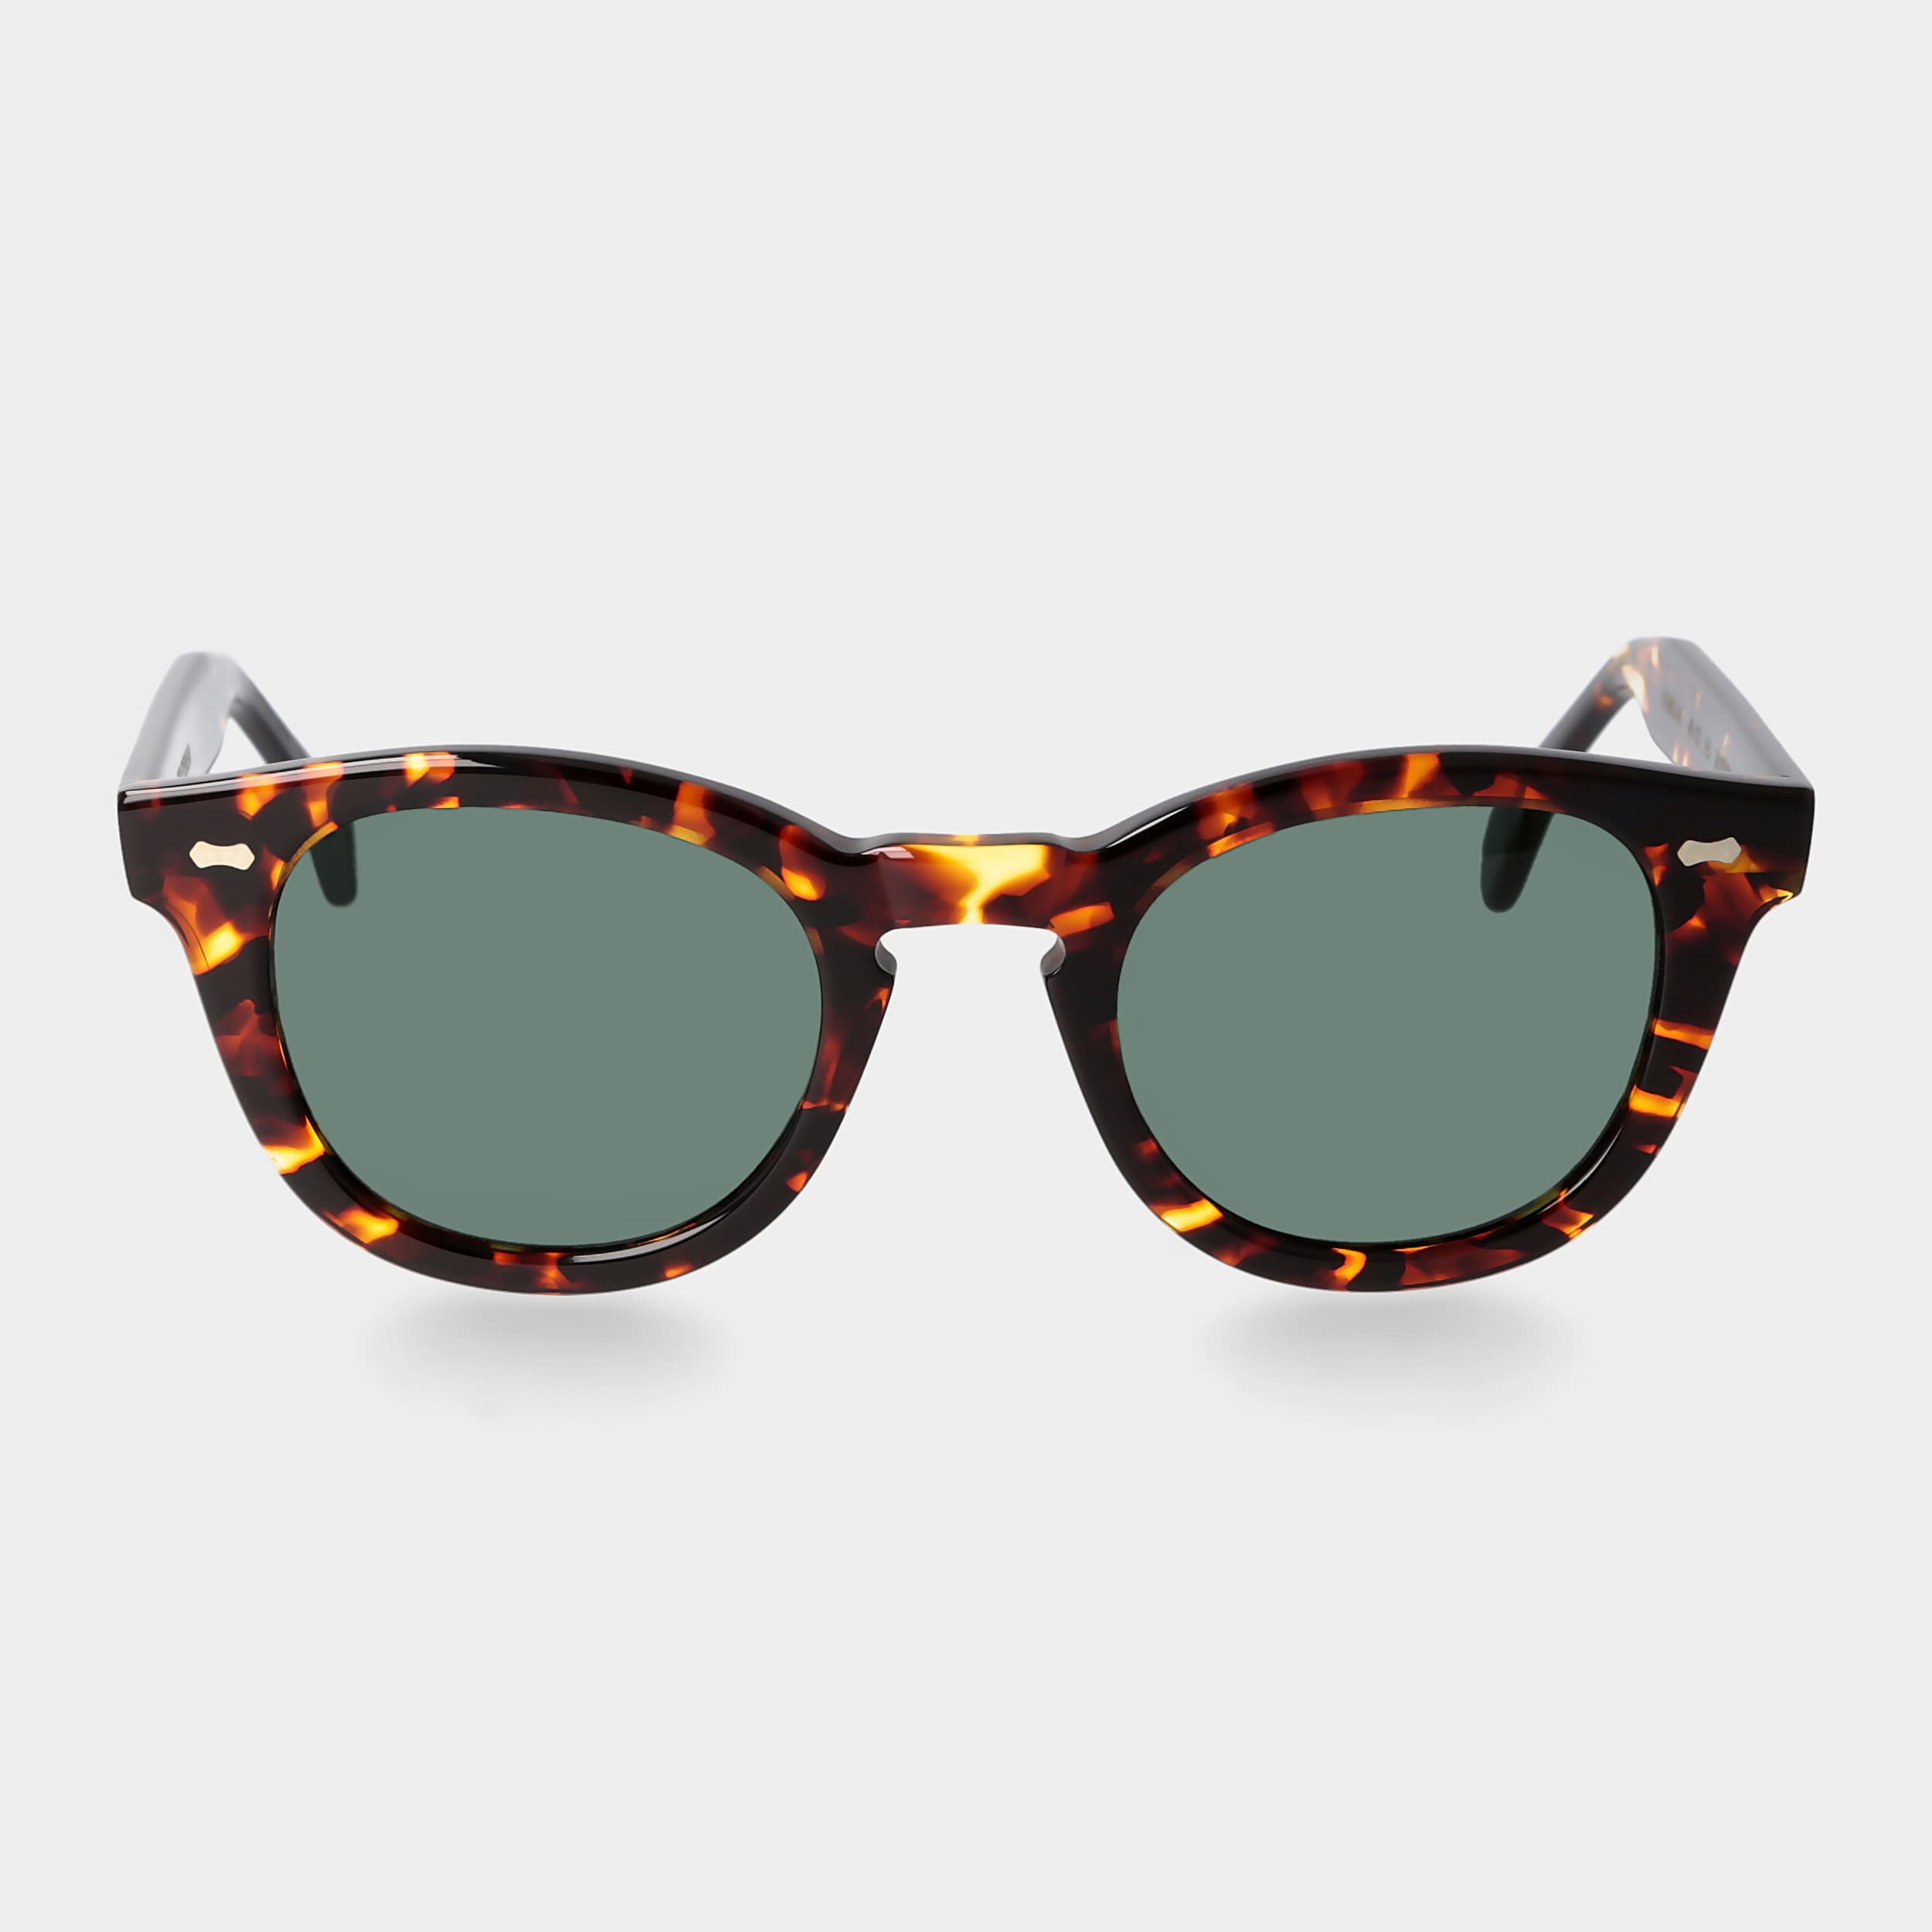 sunglasses-donegal-eco-dark-havana-bottle-green-sustainable-tbd-eyewear-front